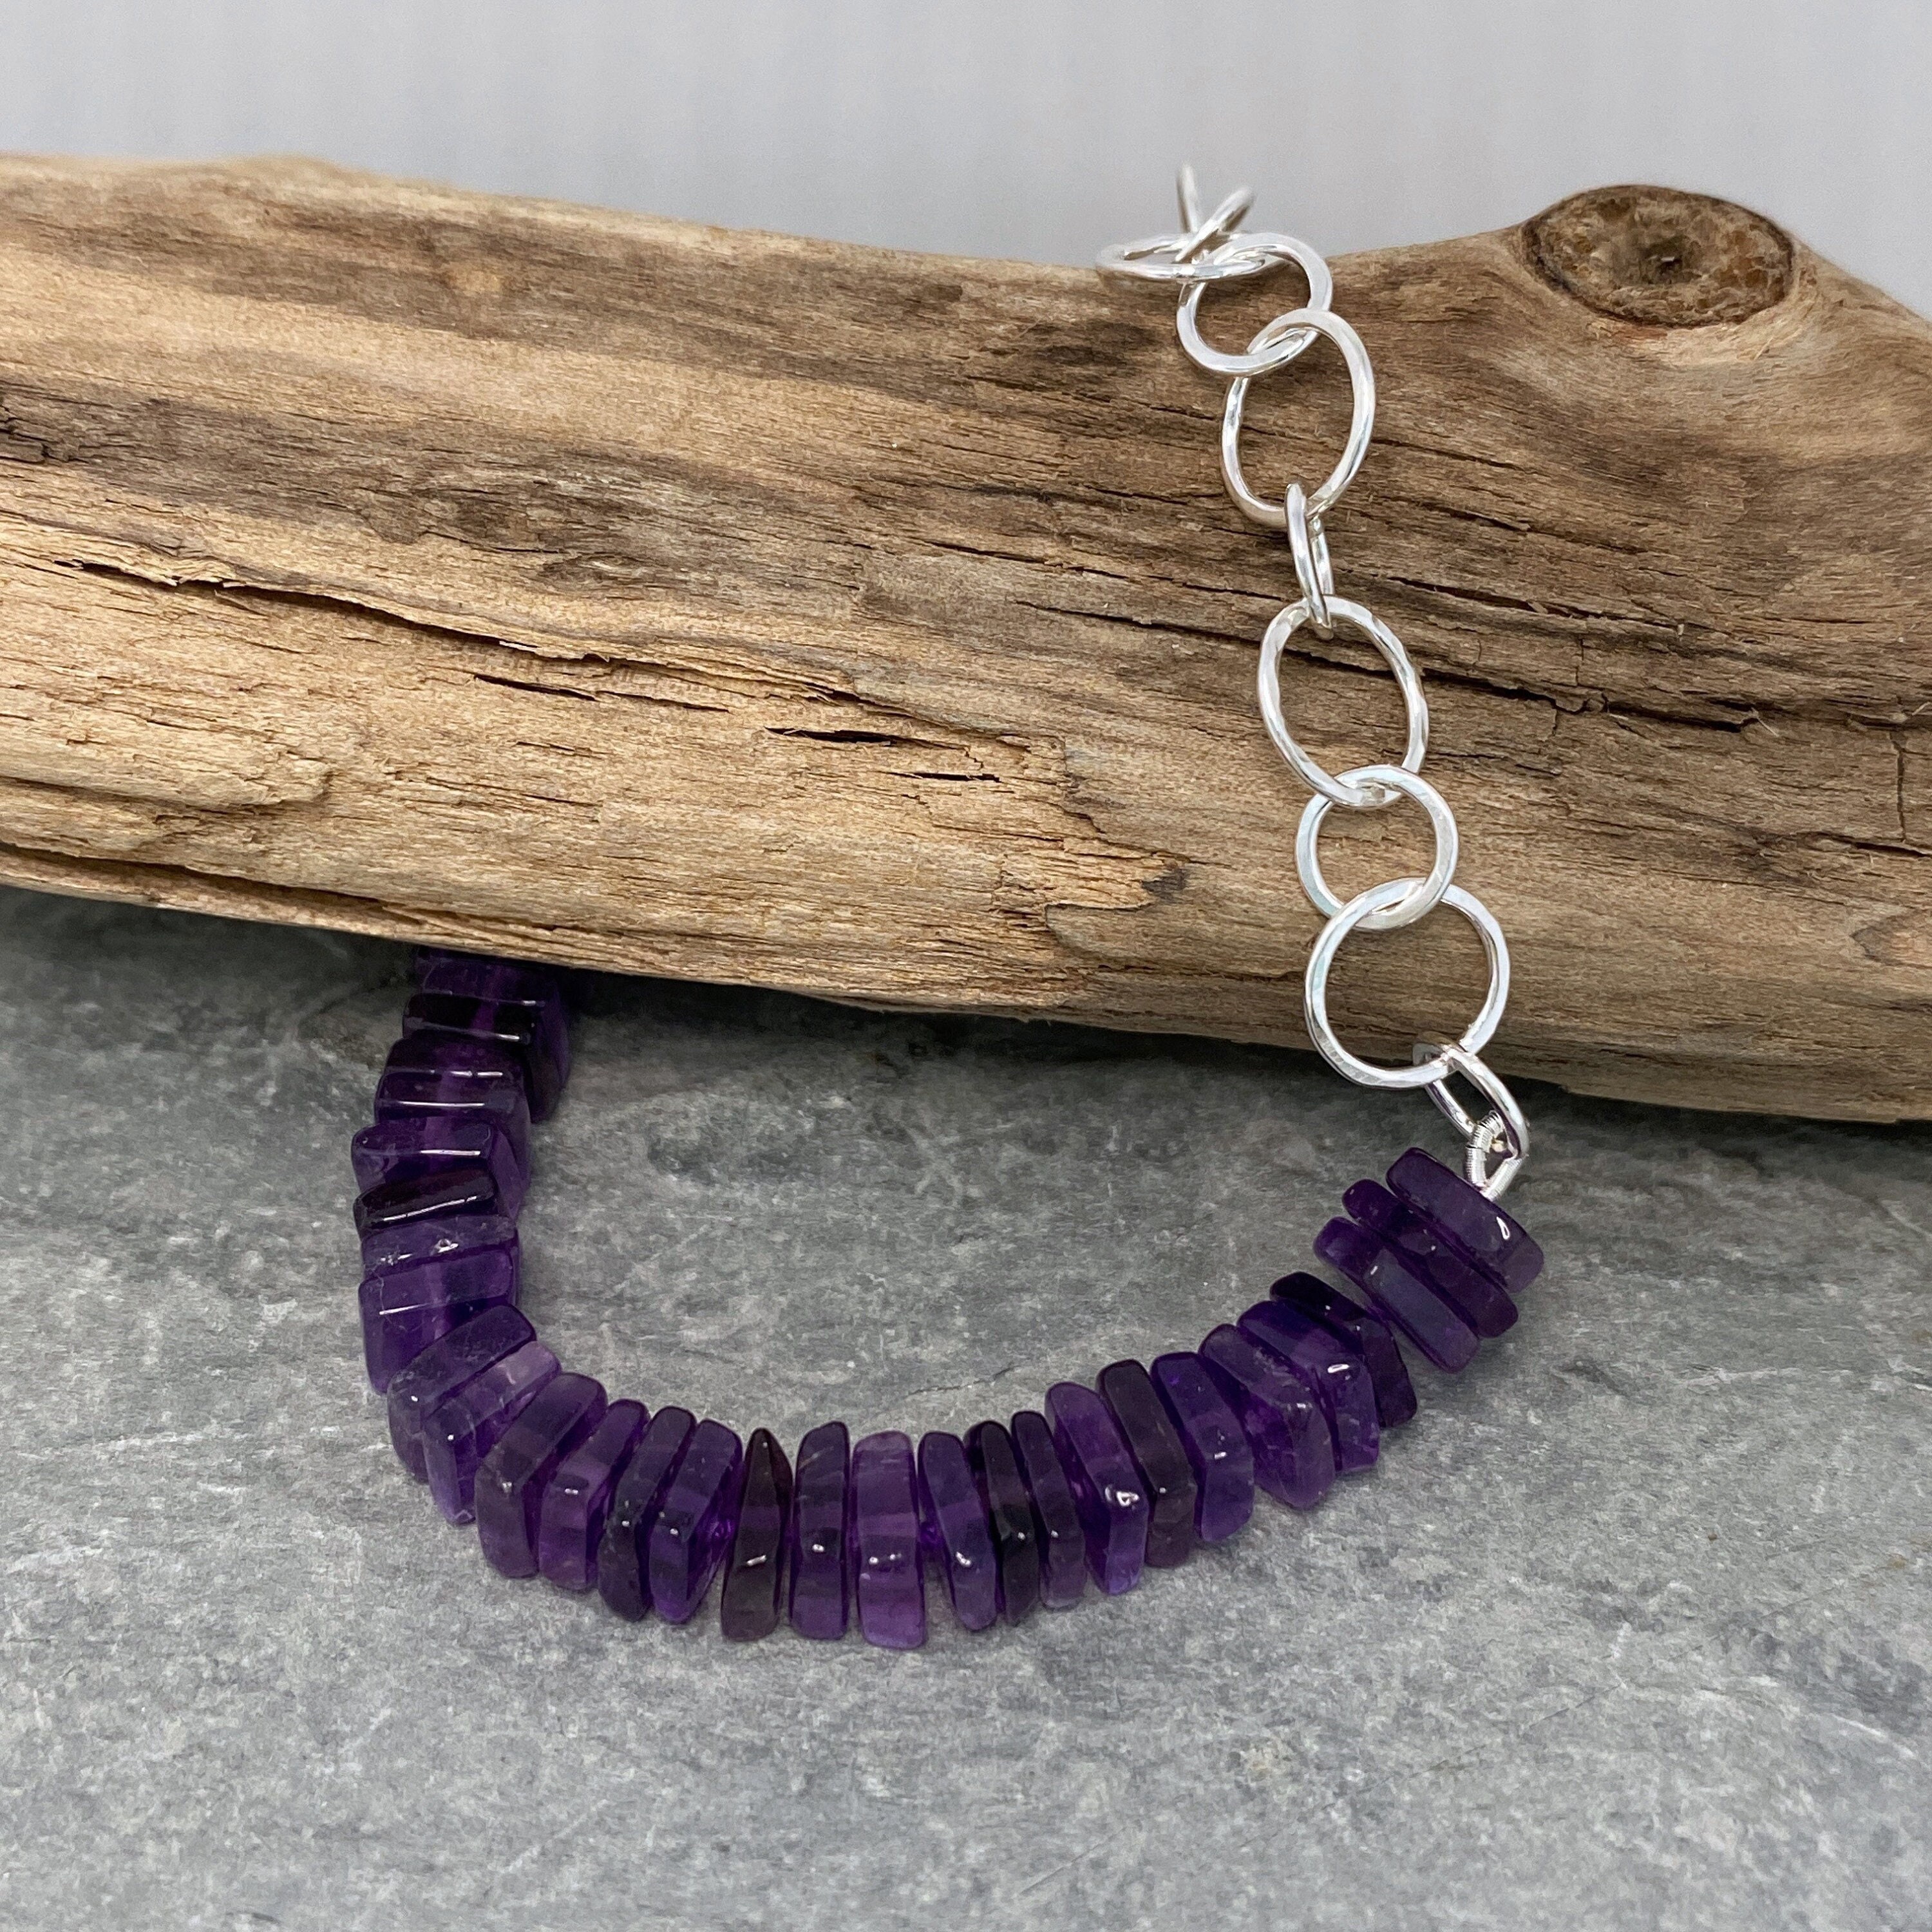 Unique Amethyst & Silver Links Bracelet, Chain Bracelet With Purple Beads, Unusual Bead Bracelet